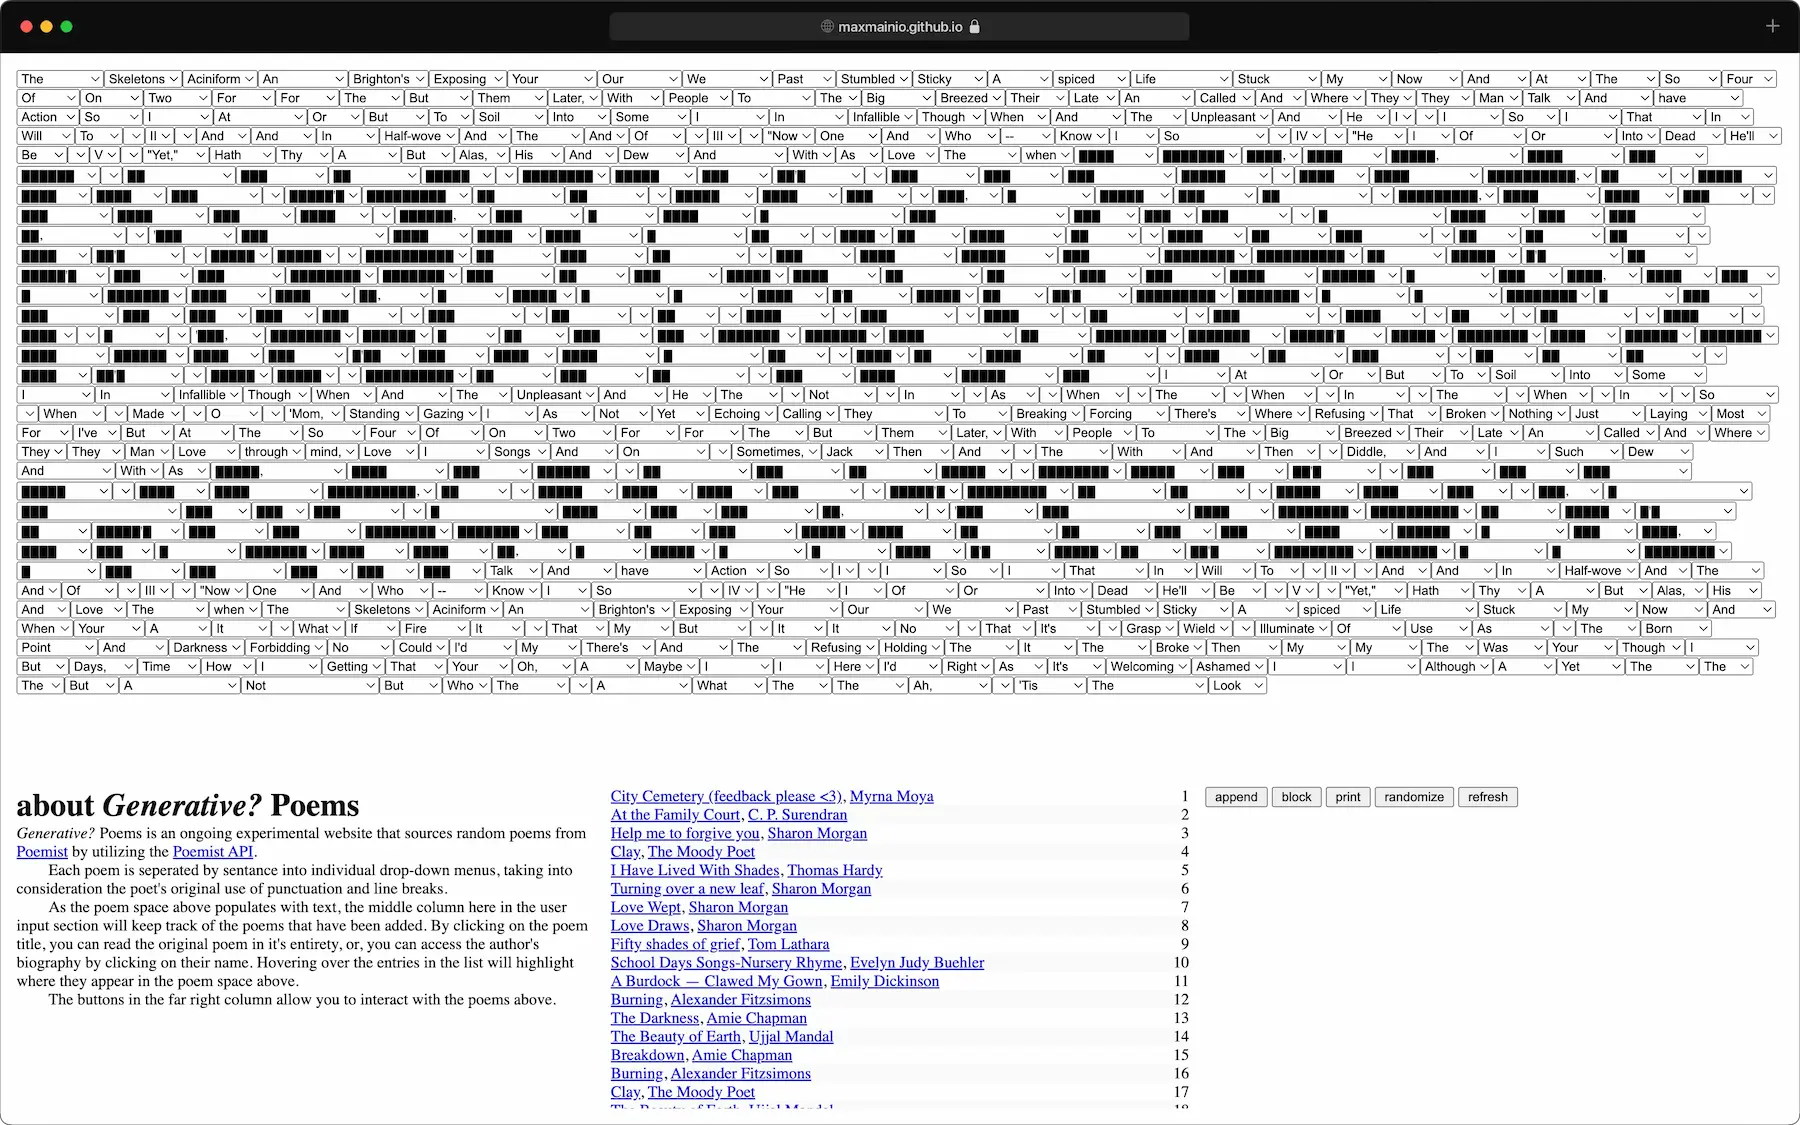 A screenshot of the Generative? Poems website.